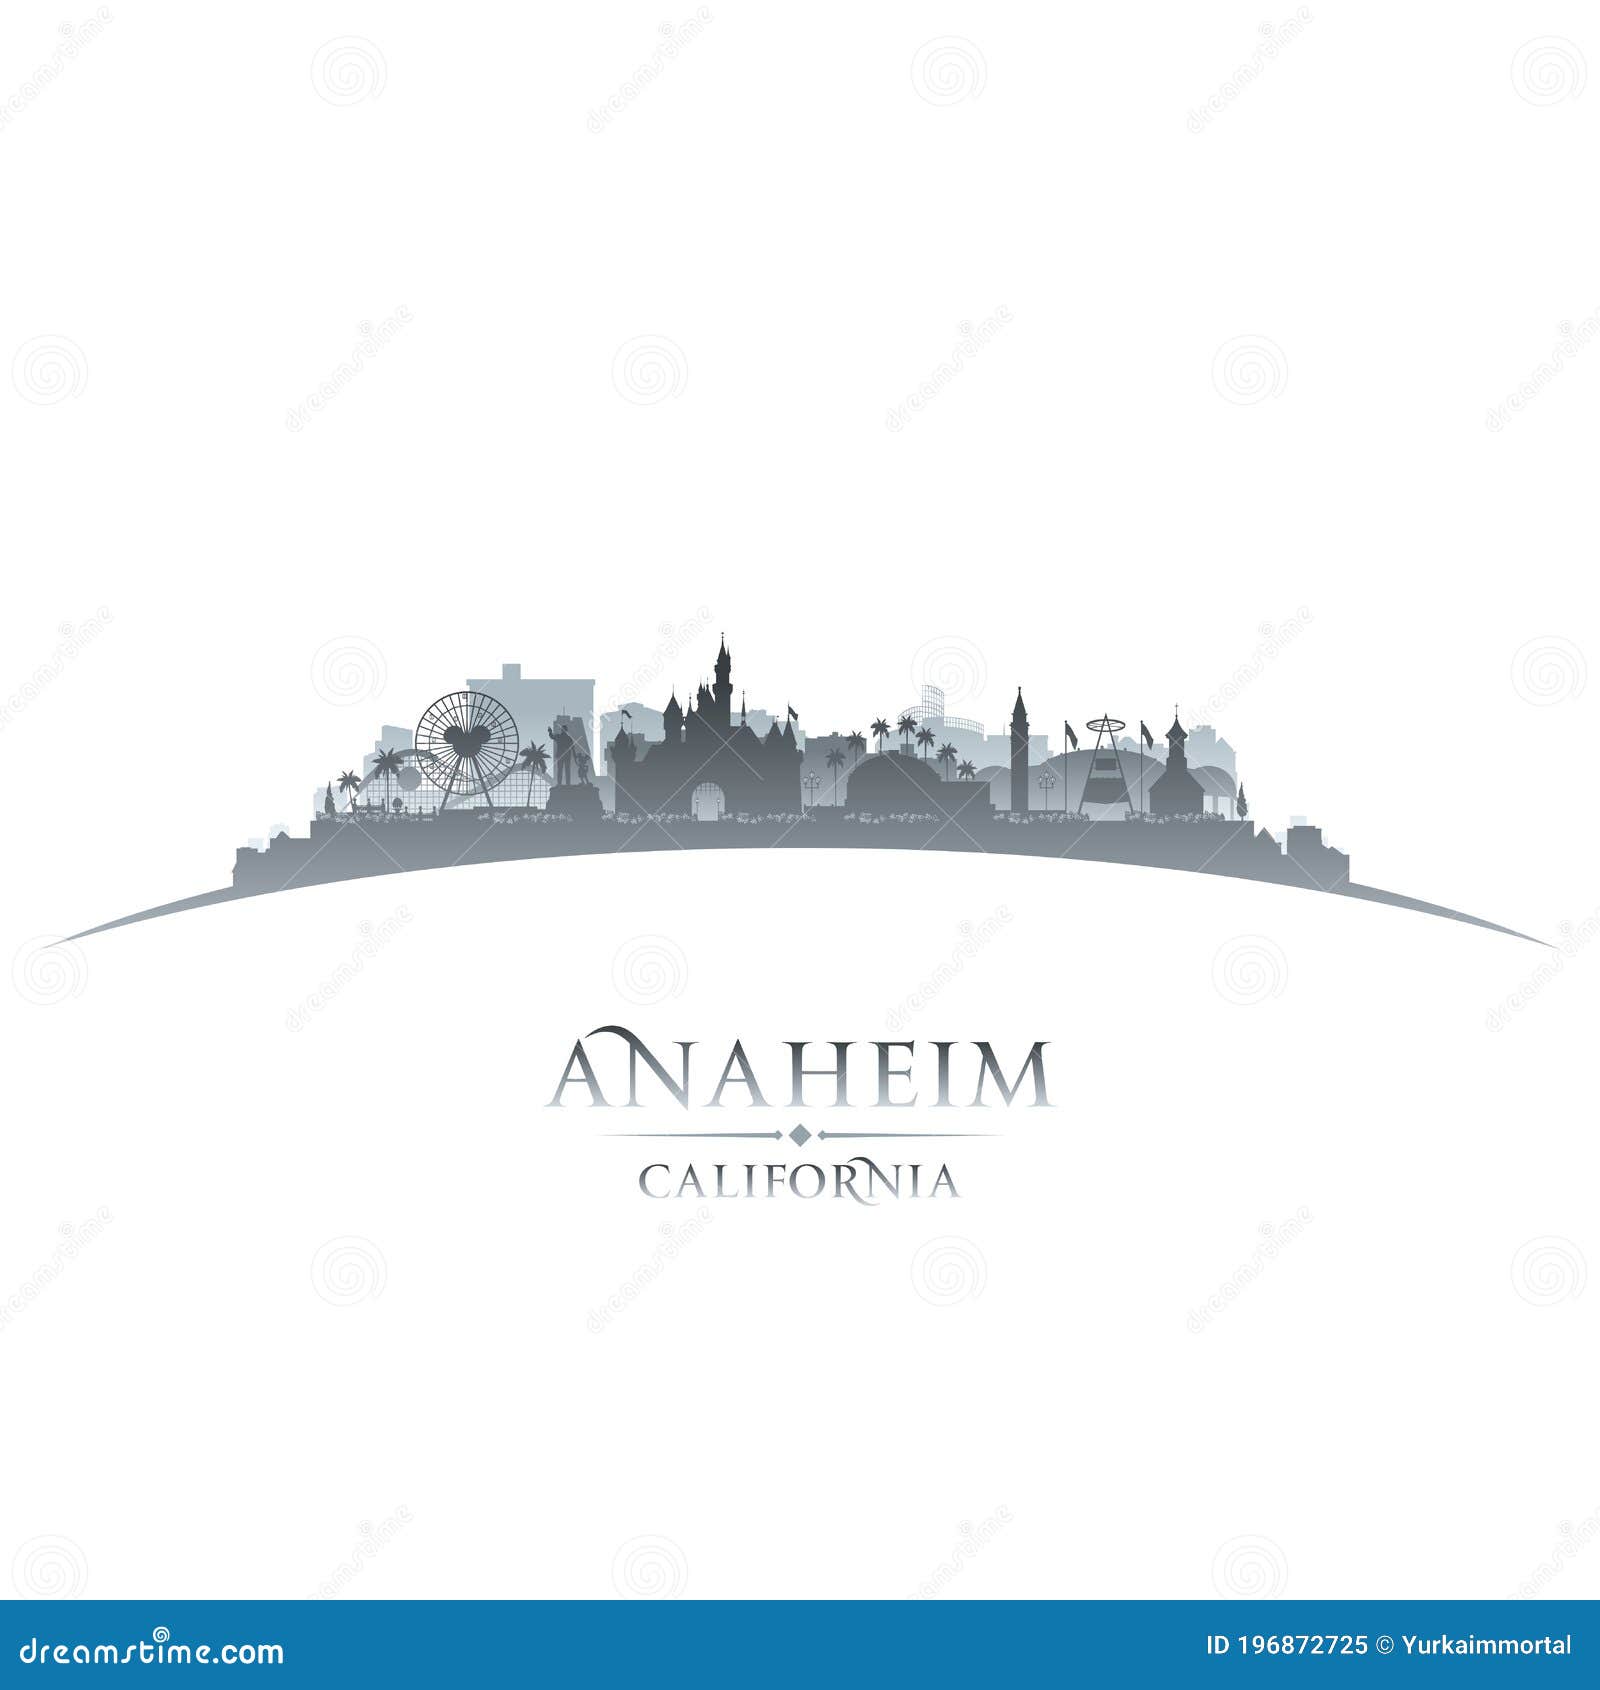 anaheim california city silhouette white background